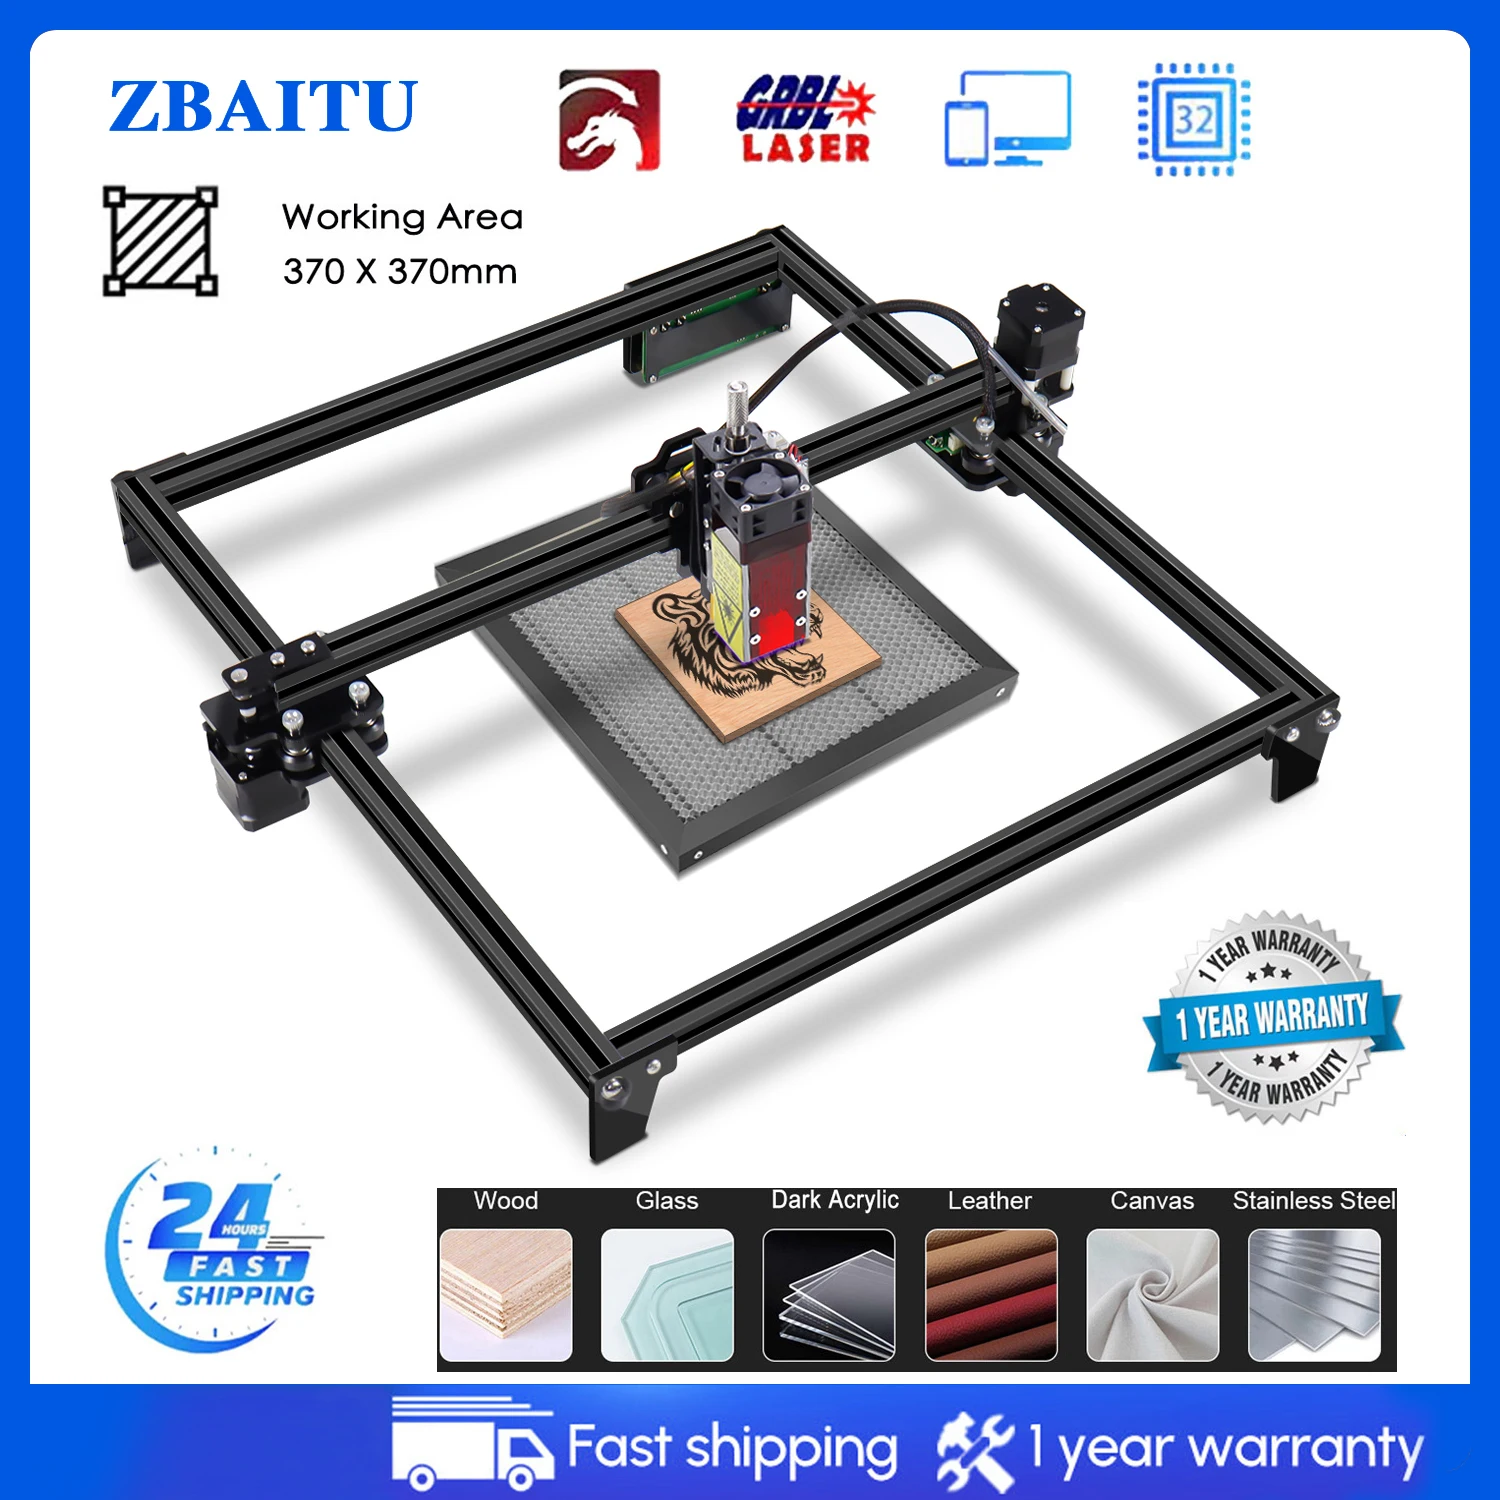 ZBAITU Laser Cutting Engraver 80W Diode Wood Metal Marking Engraving Cutter CNC 32-Bit Wifi 37X37cm Milling Woodworking Machine